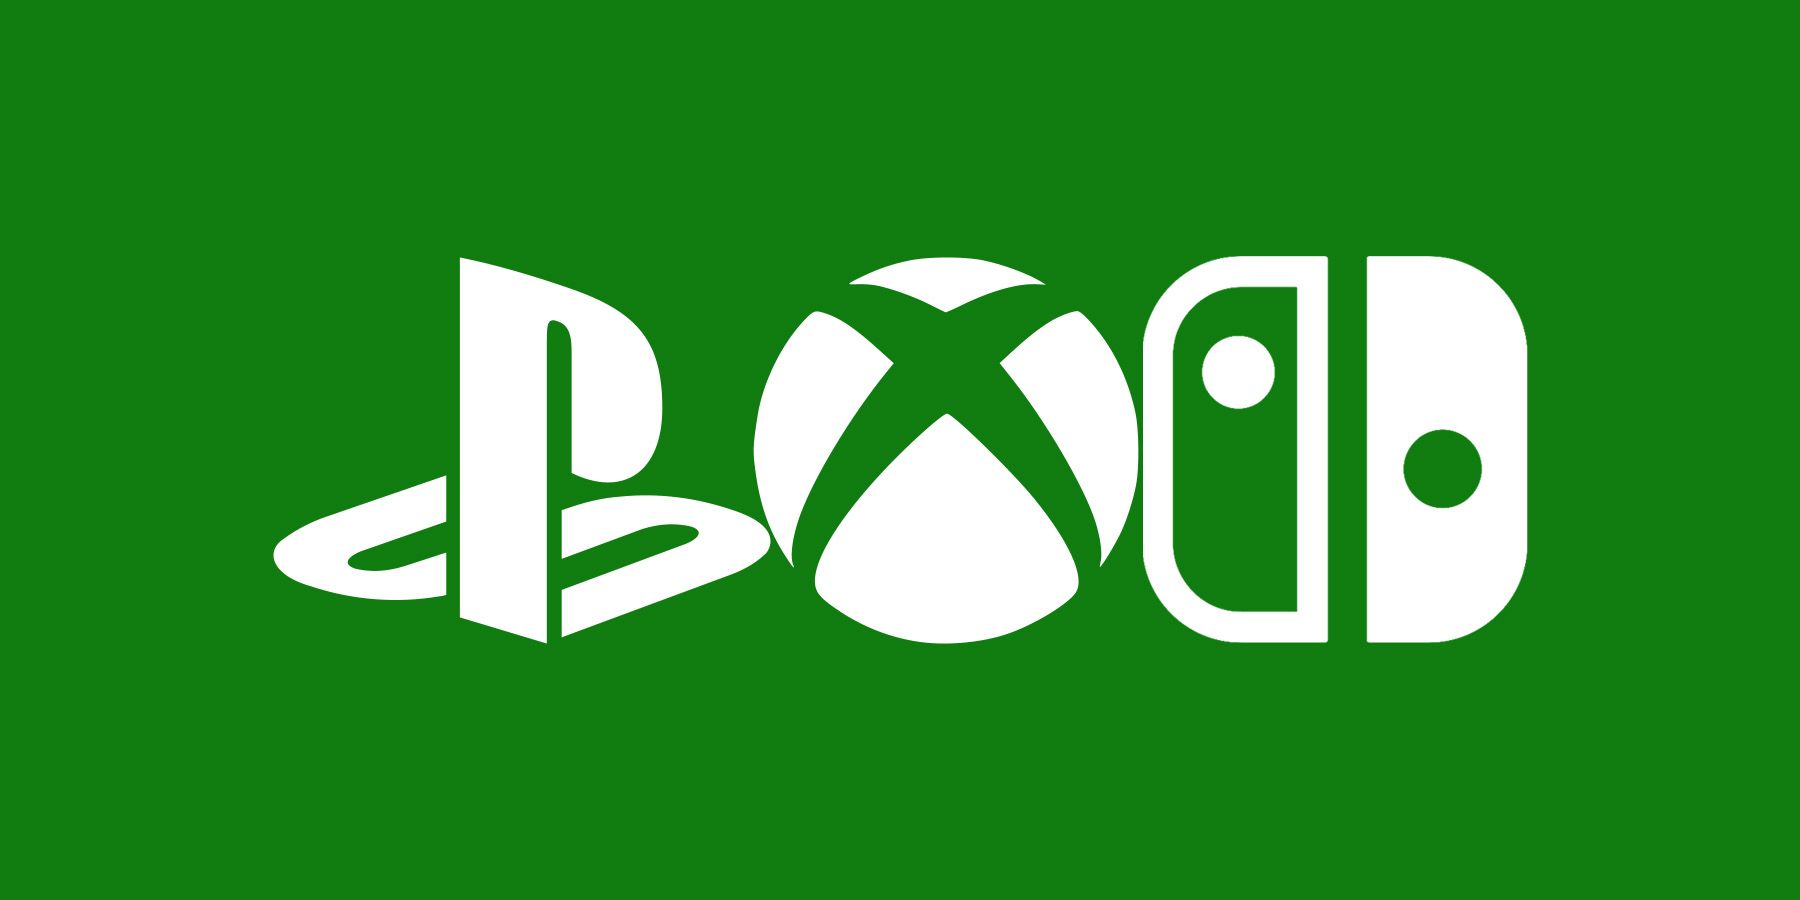 white PlayStation Xbox Nintendo Switch logos on dark green Xbox background